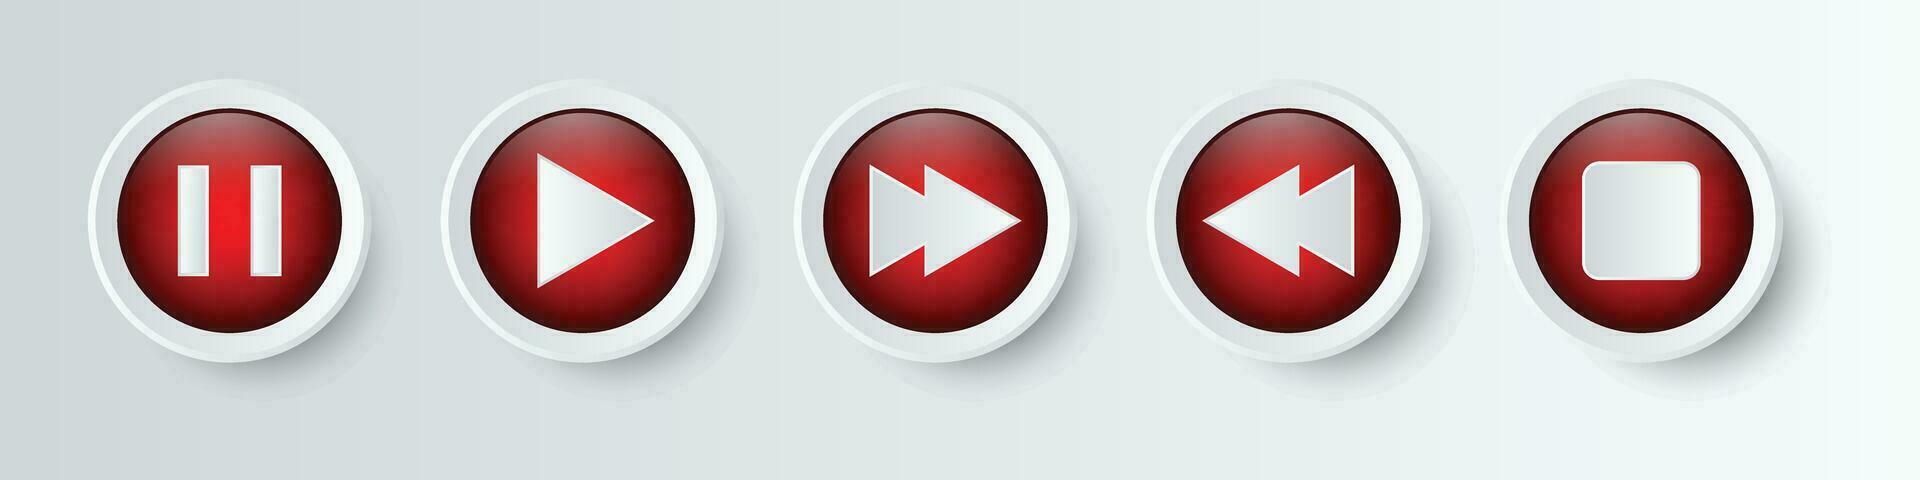 multimedia jugador íconos colocar, jugar botón, pausa botón, próximo, adelante, hacia atrás, detener, repetir botón con 3d lustroso realista circulo icono colección aislado en blanco antecedentes vector ilustración